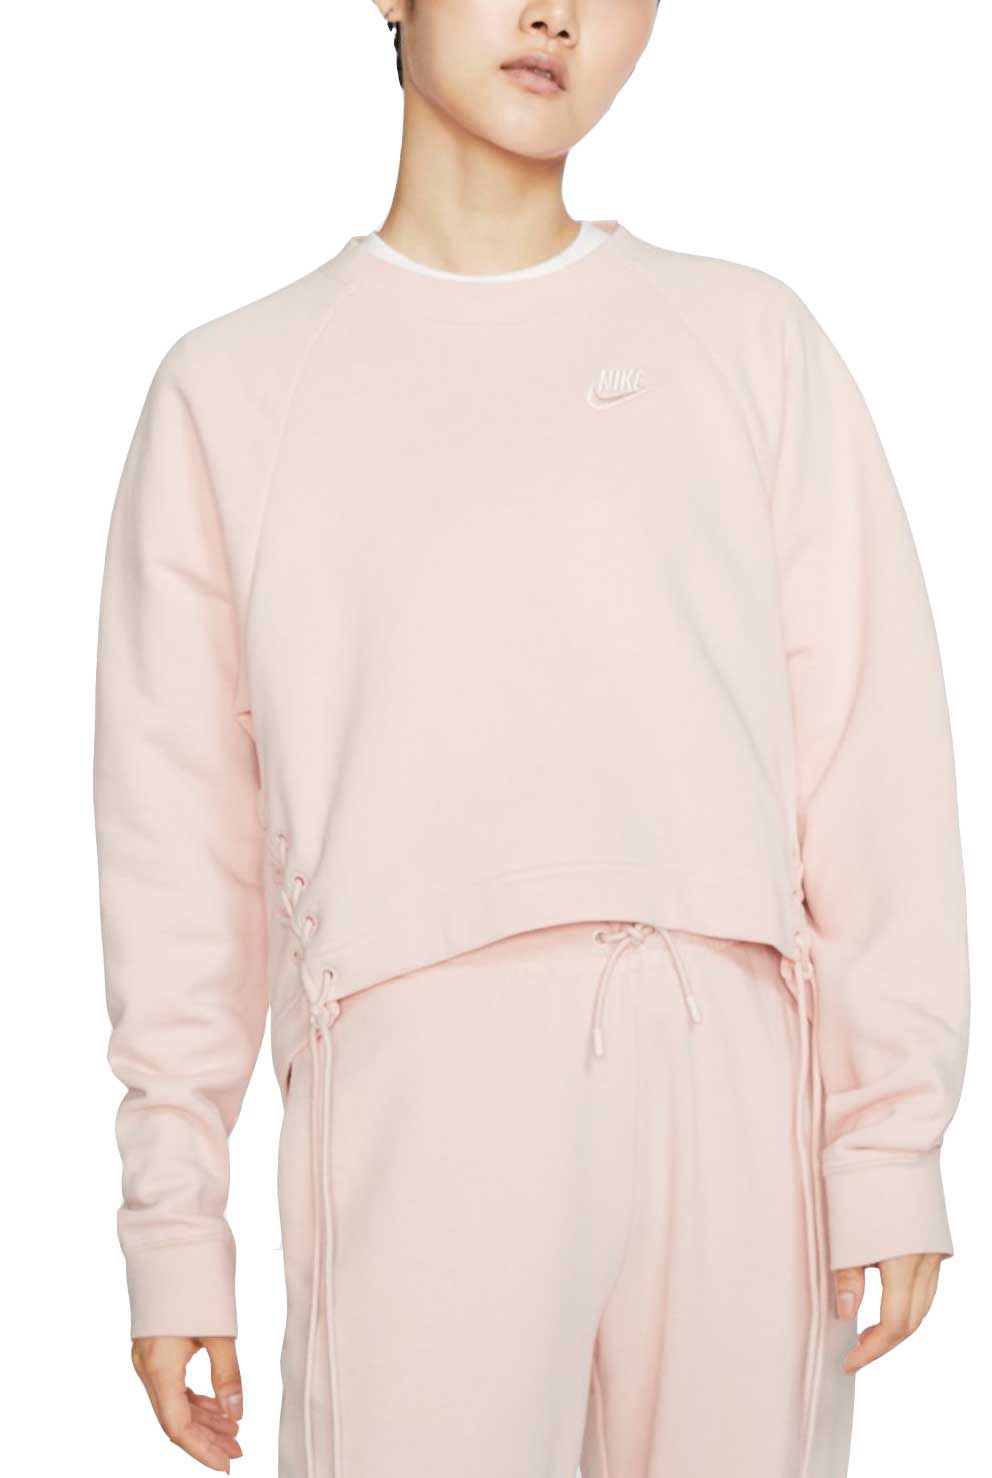 nike women's essential fleece sweatshirt